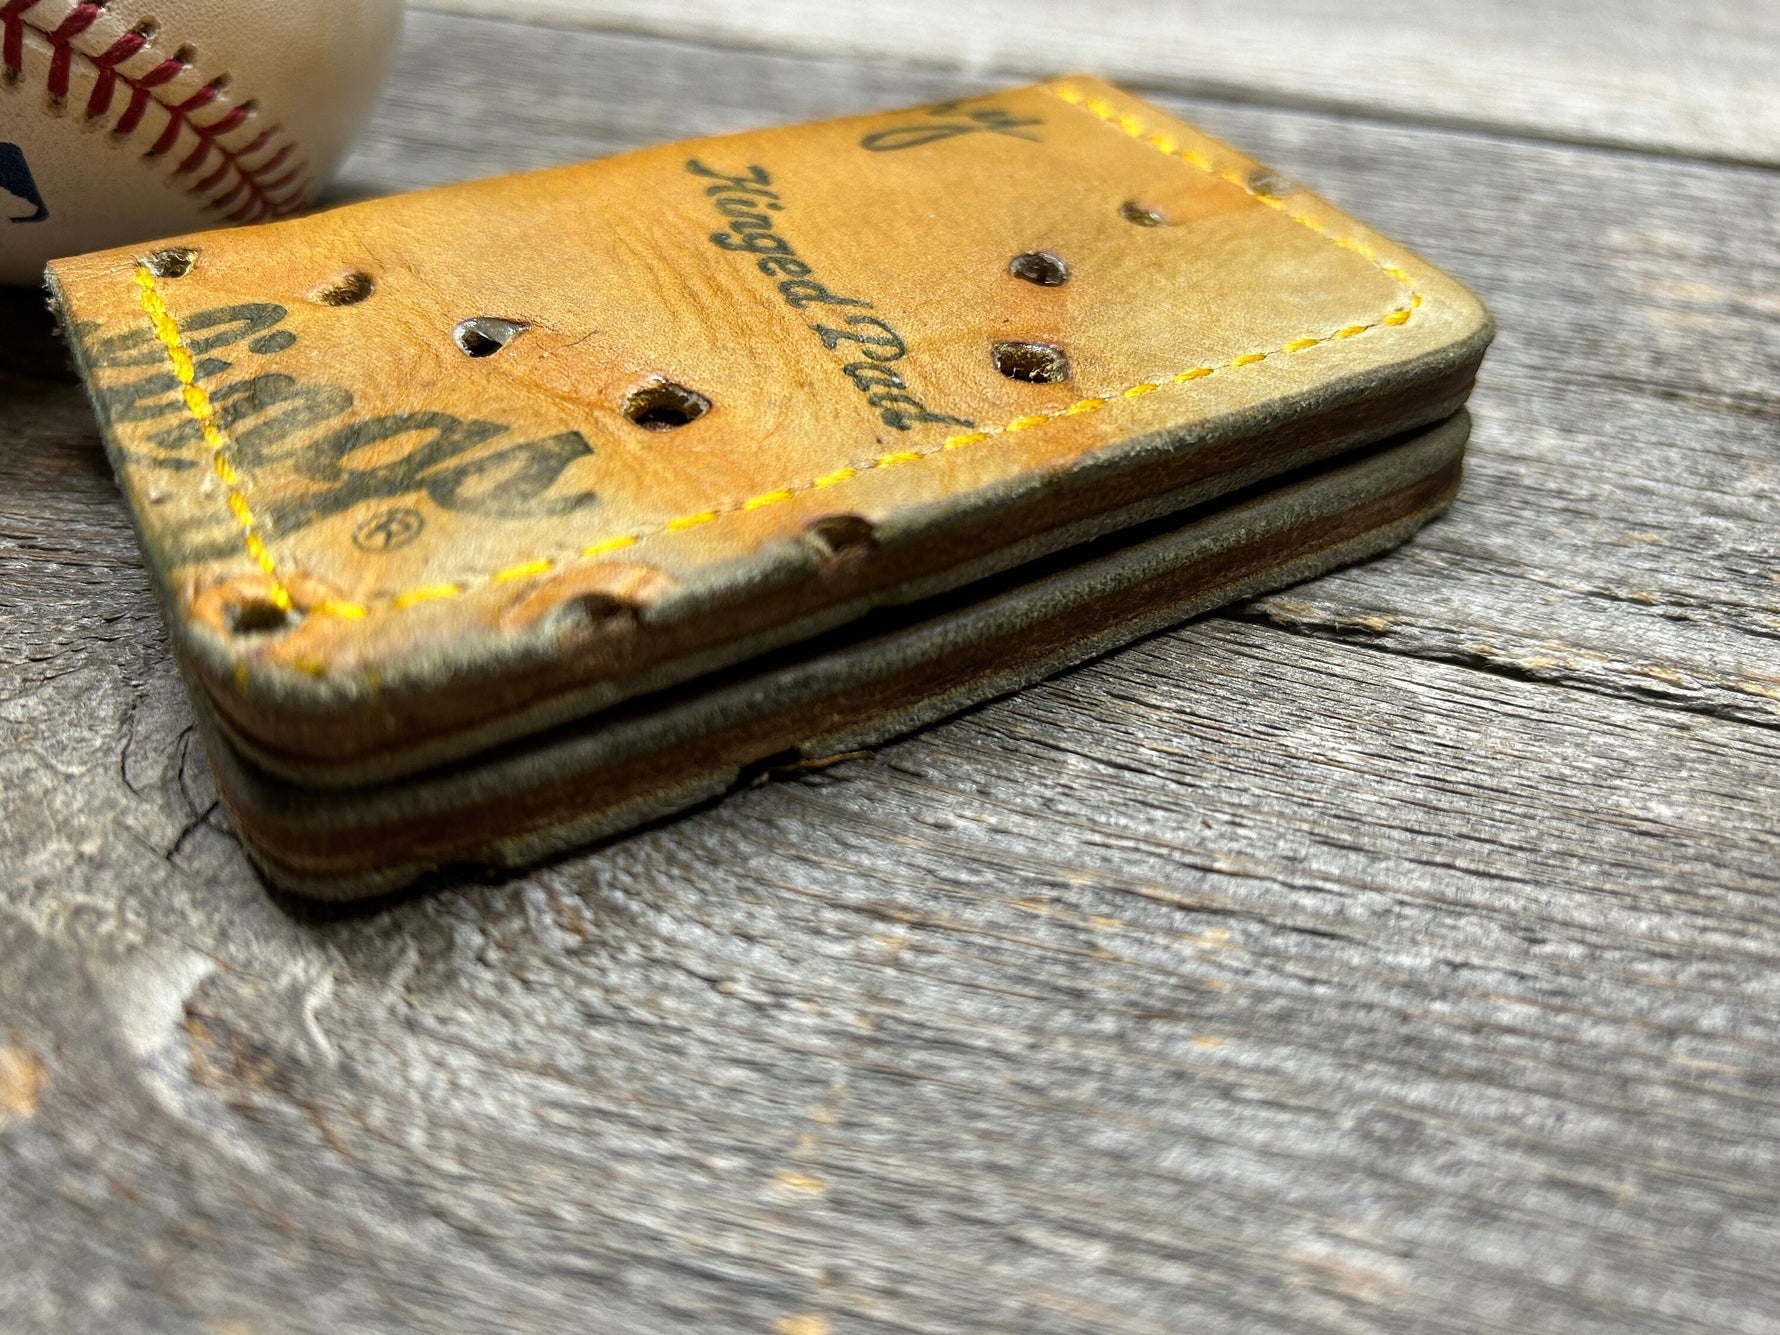 Vintage Rawlings Dale Murphy Baseball Glove Wallet!